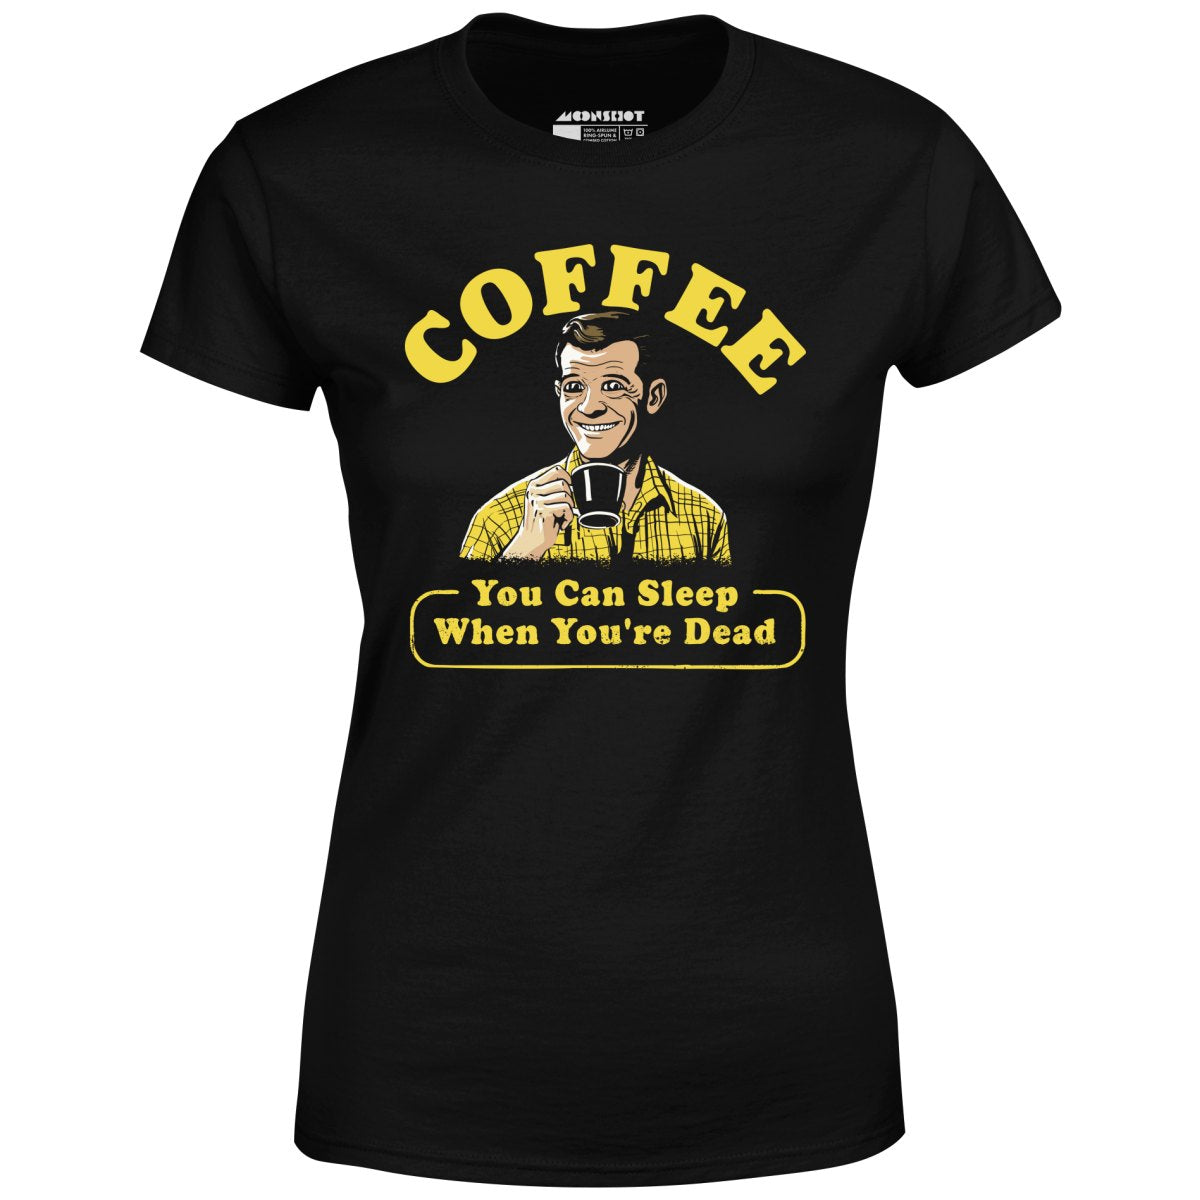 Coffee - You Can Sleep When You're Dead - Women's T-Shirt